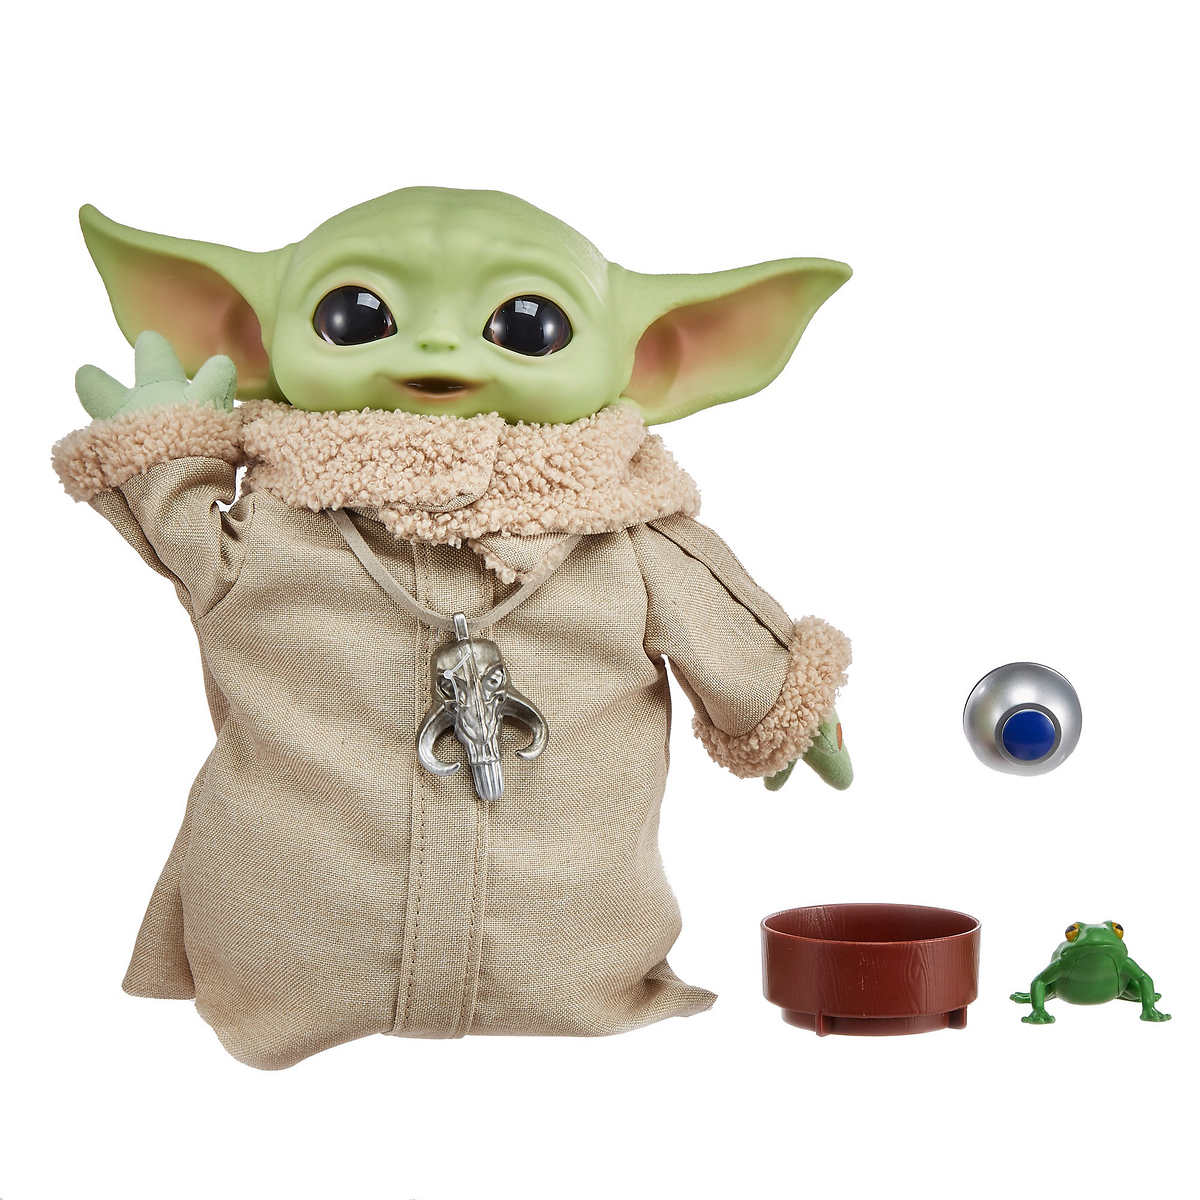 Custom Yoda Best Personalized Star Wars The Mandalorian Mug